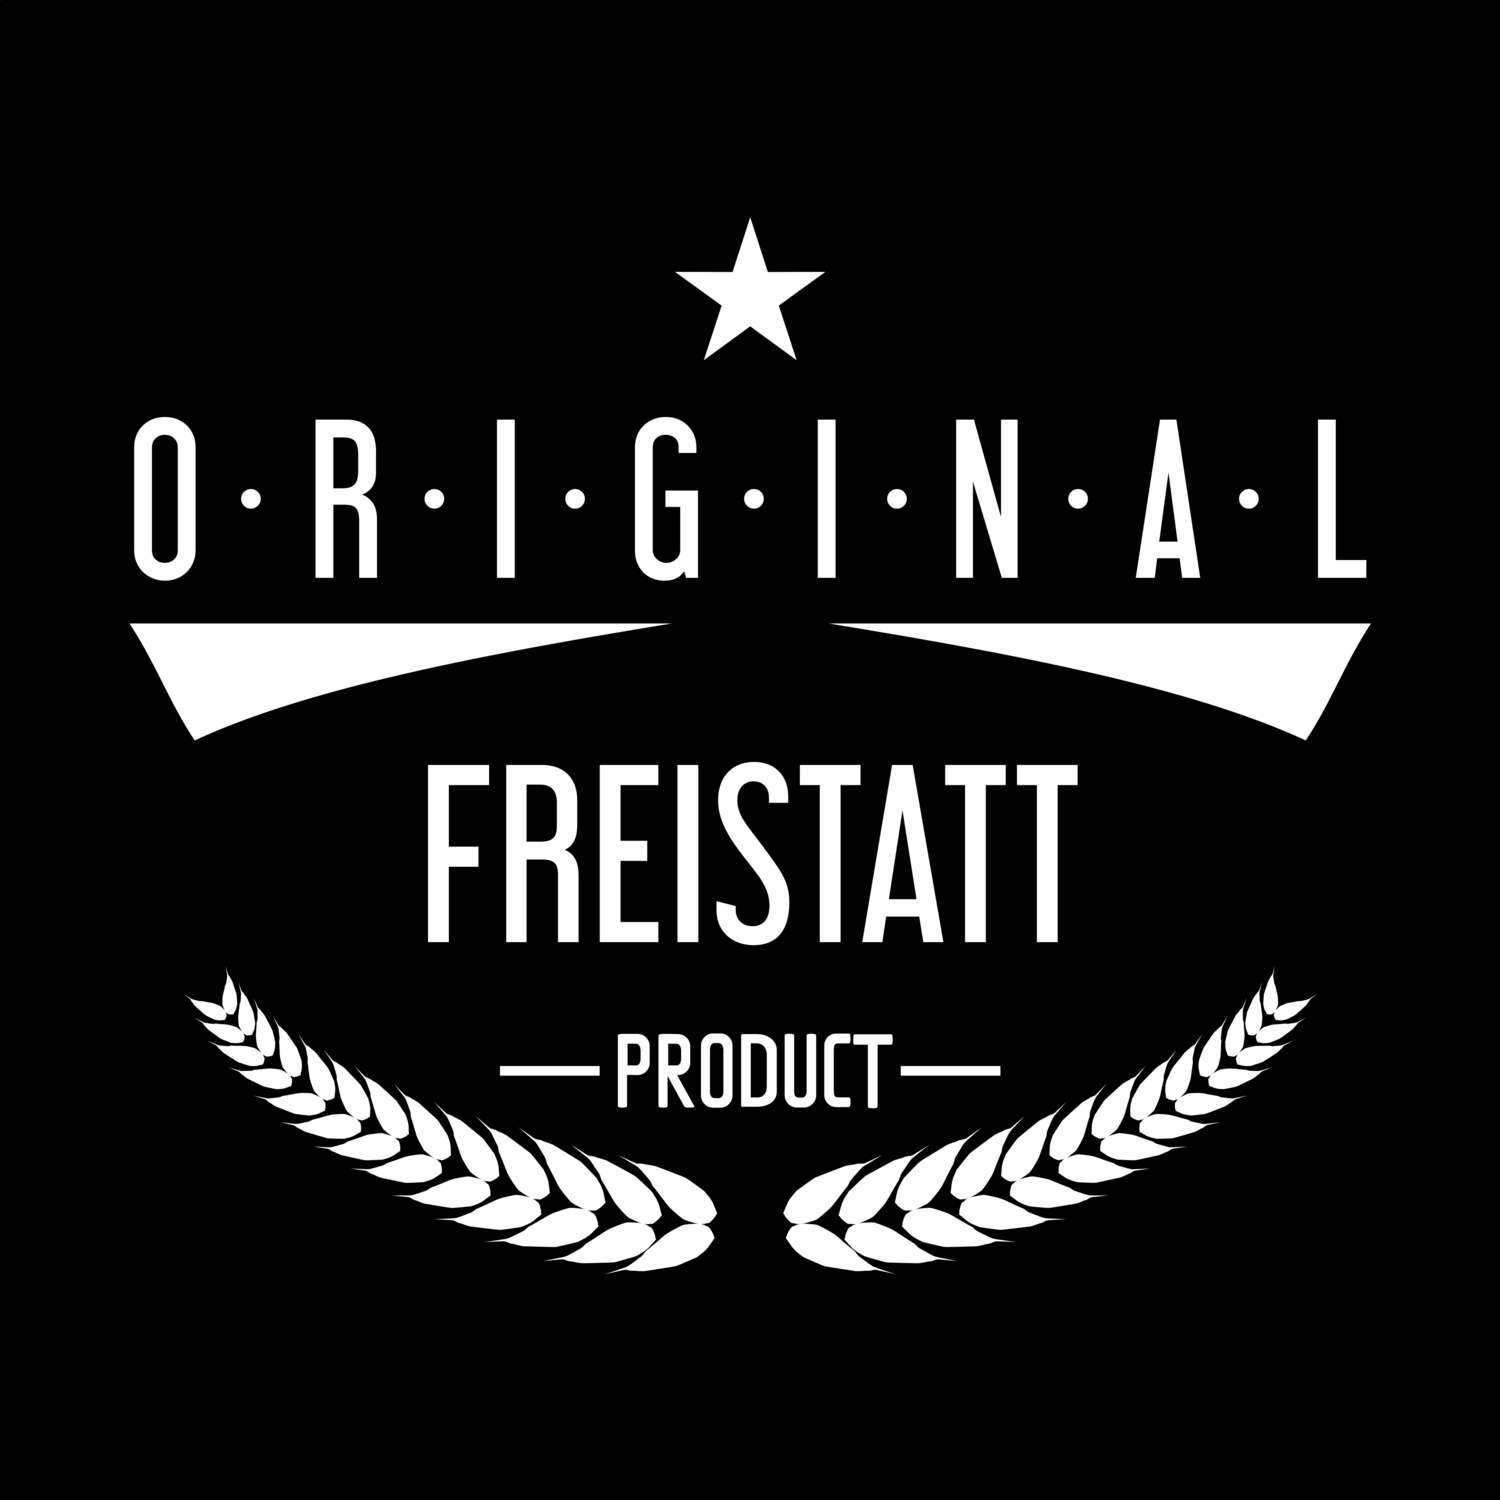 Freistatt T-Shirt »Original Product«